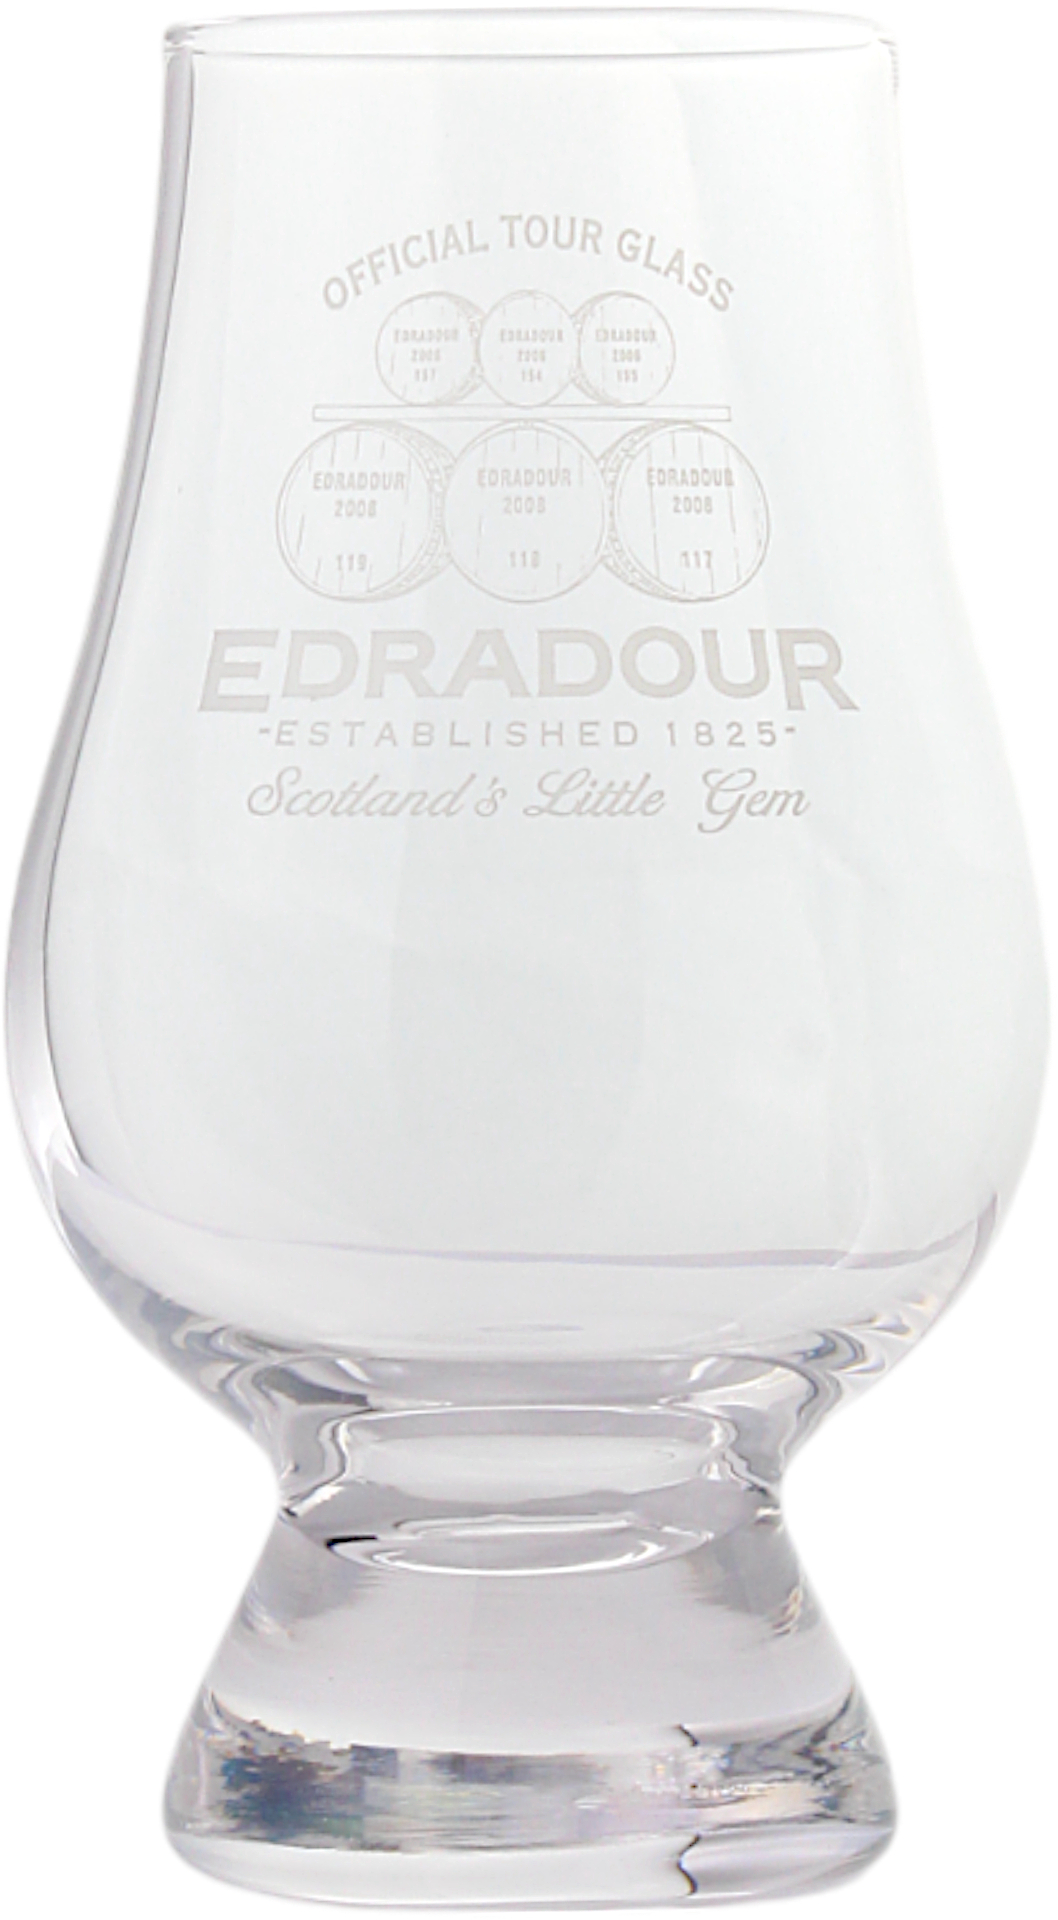 Edradour Official Tour Glass Glencairn